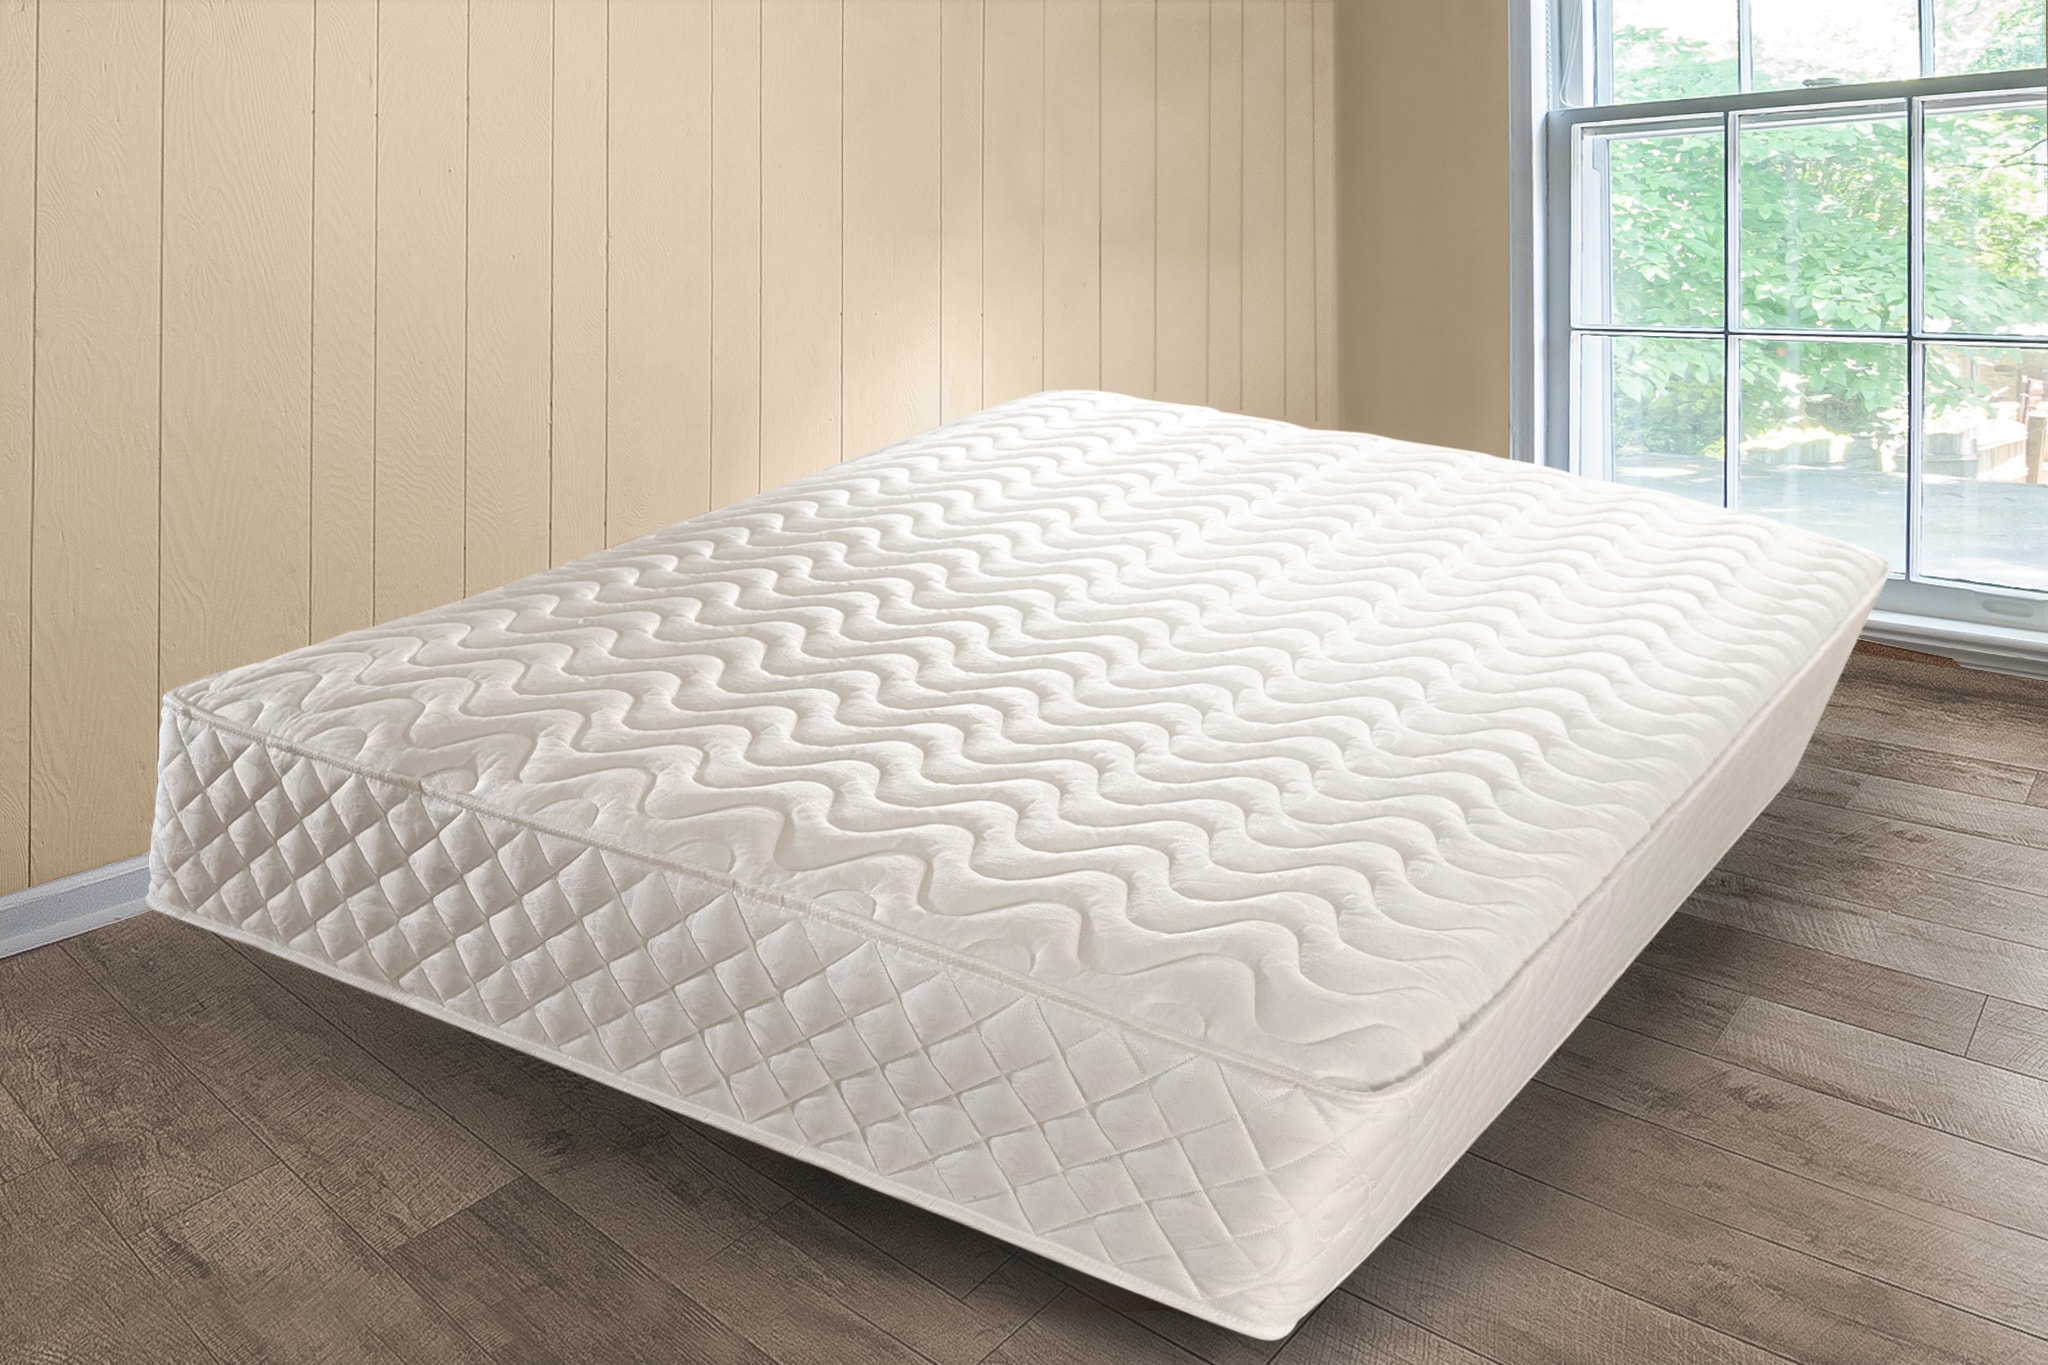 140cm x 200cm memory foam mattress